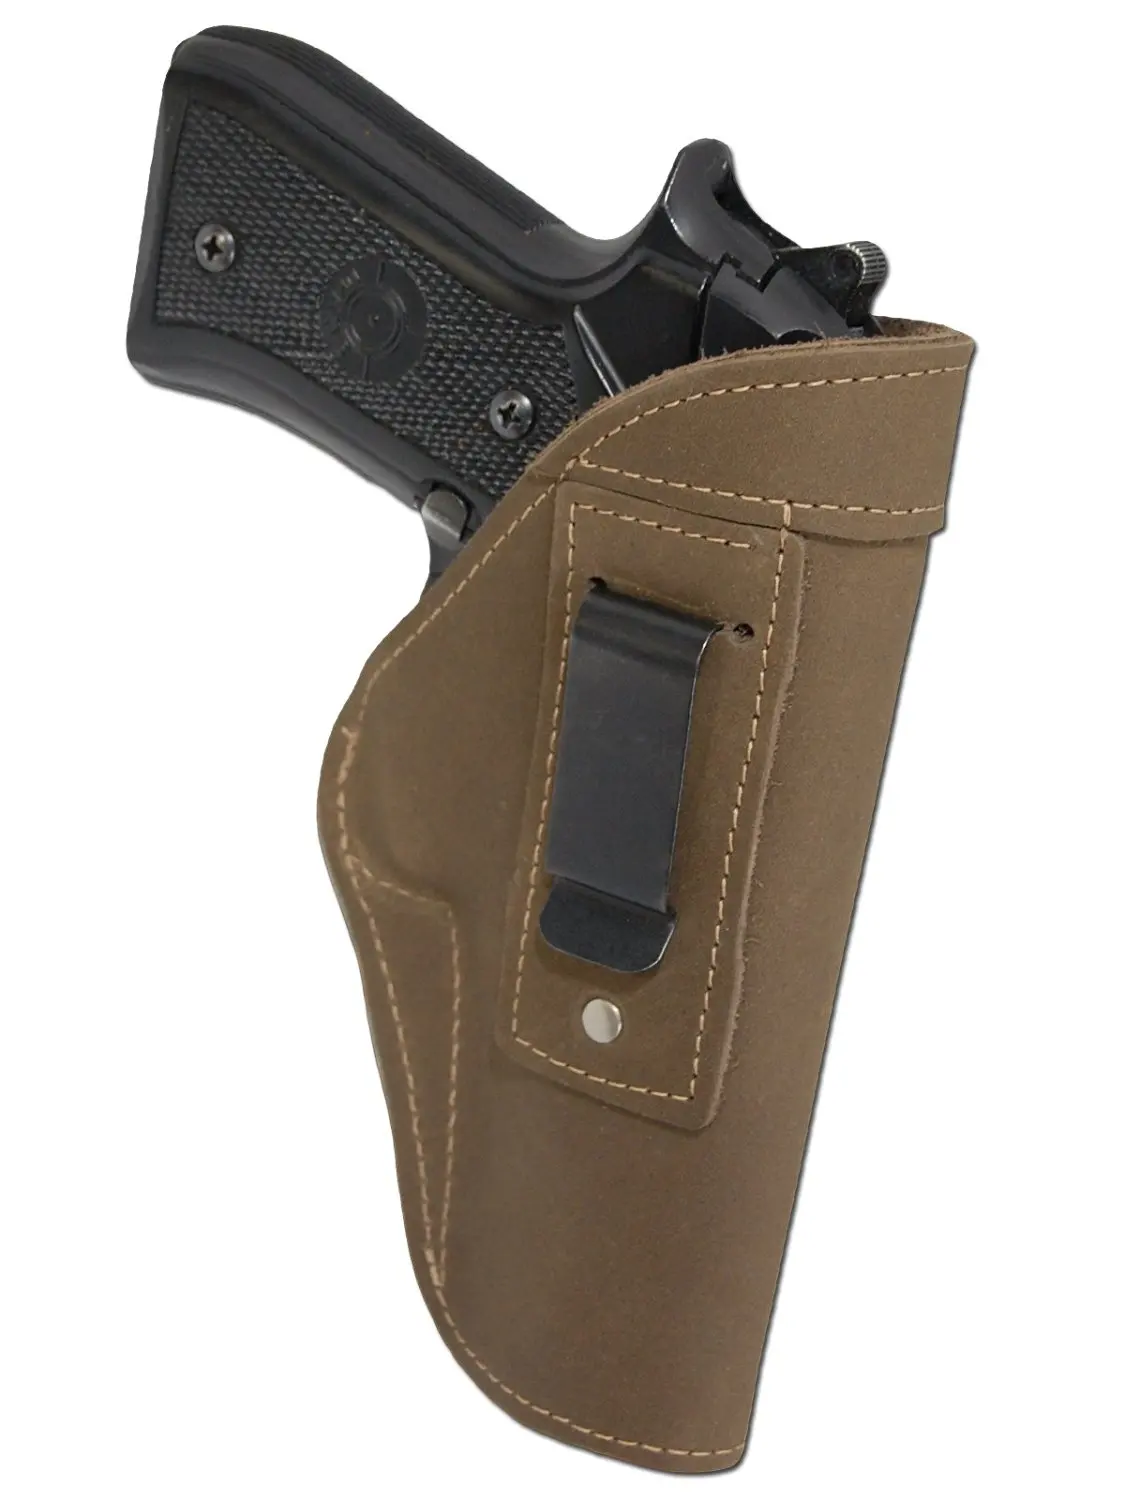 Buy NEW Barsony Olive Drab Leather IWB Gun Holster for Glock